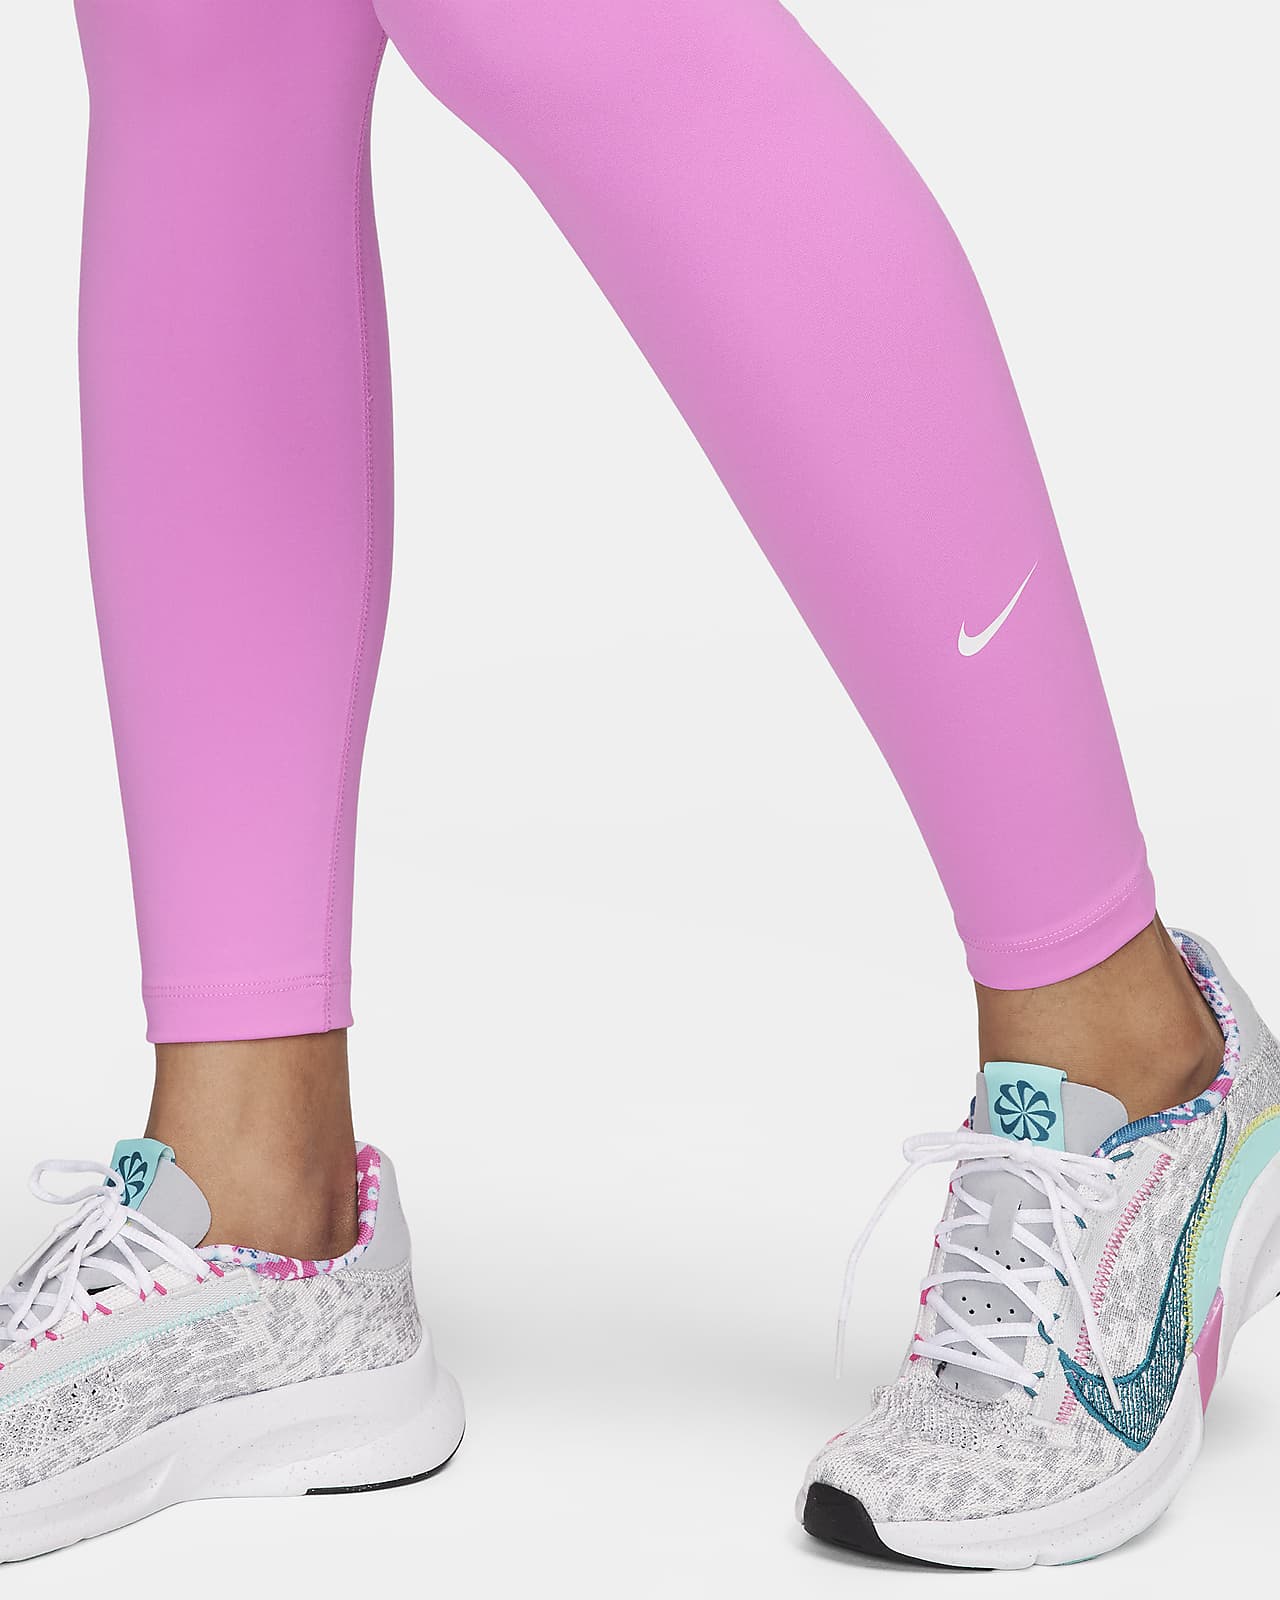 Legging 7/8 woman Nike One Mid-Rise - Baselayers - Textile - Handball wear